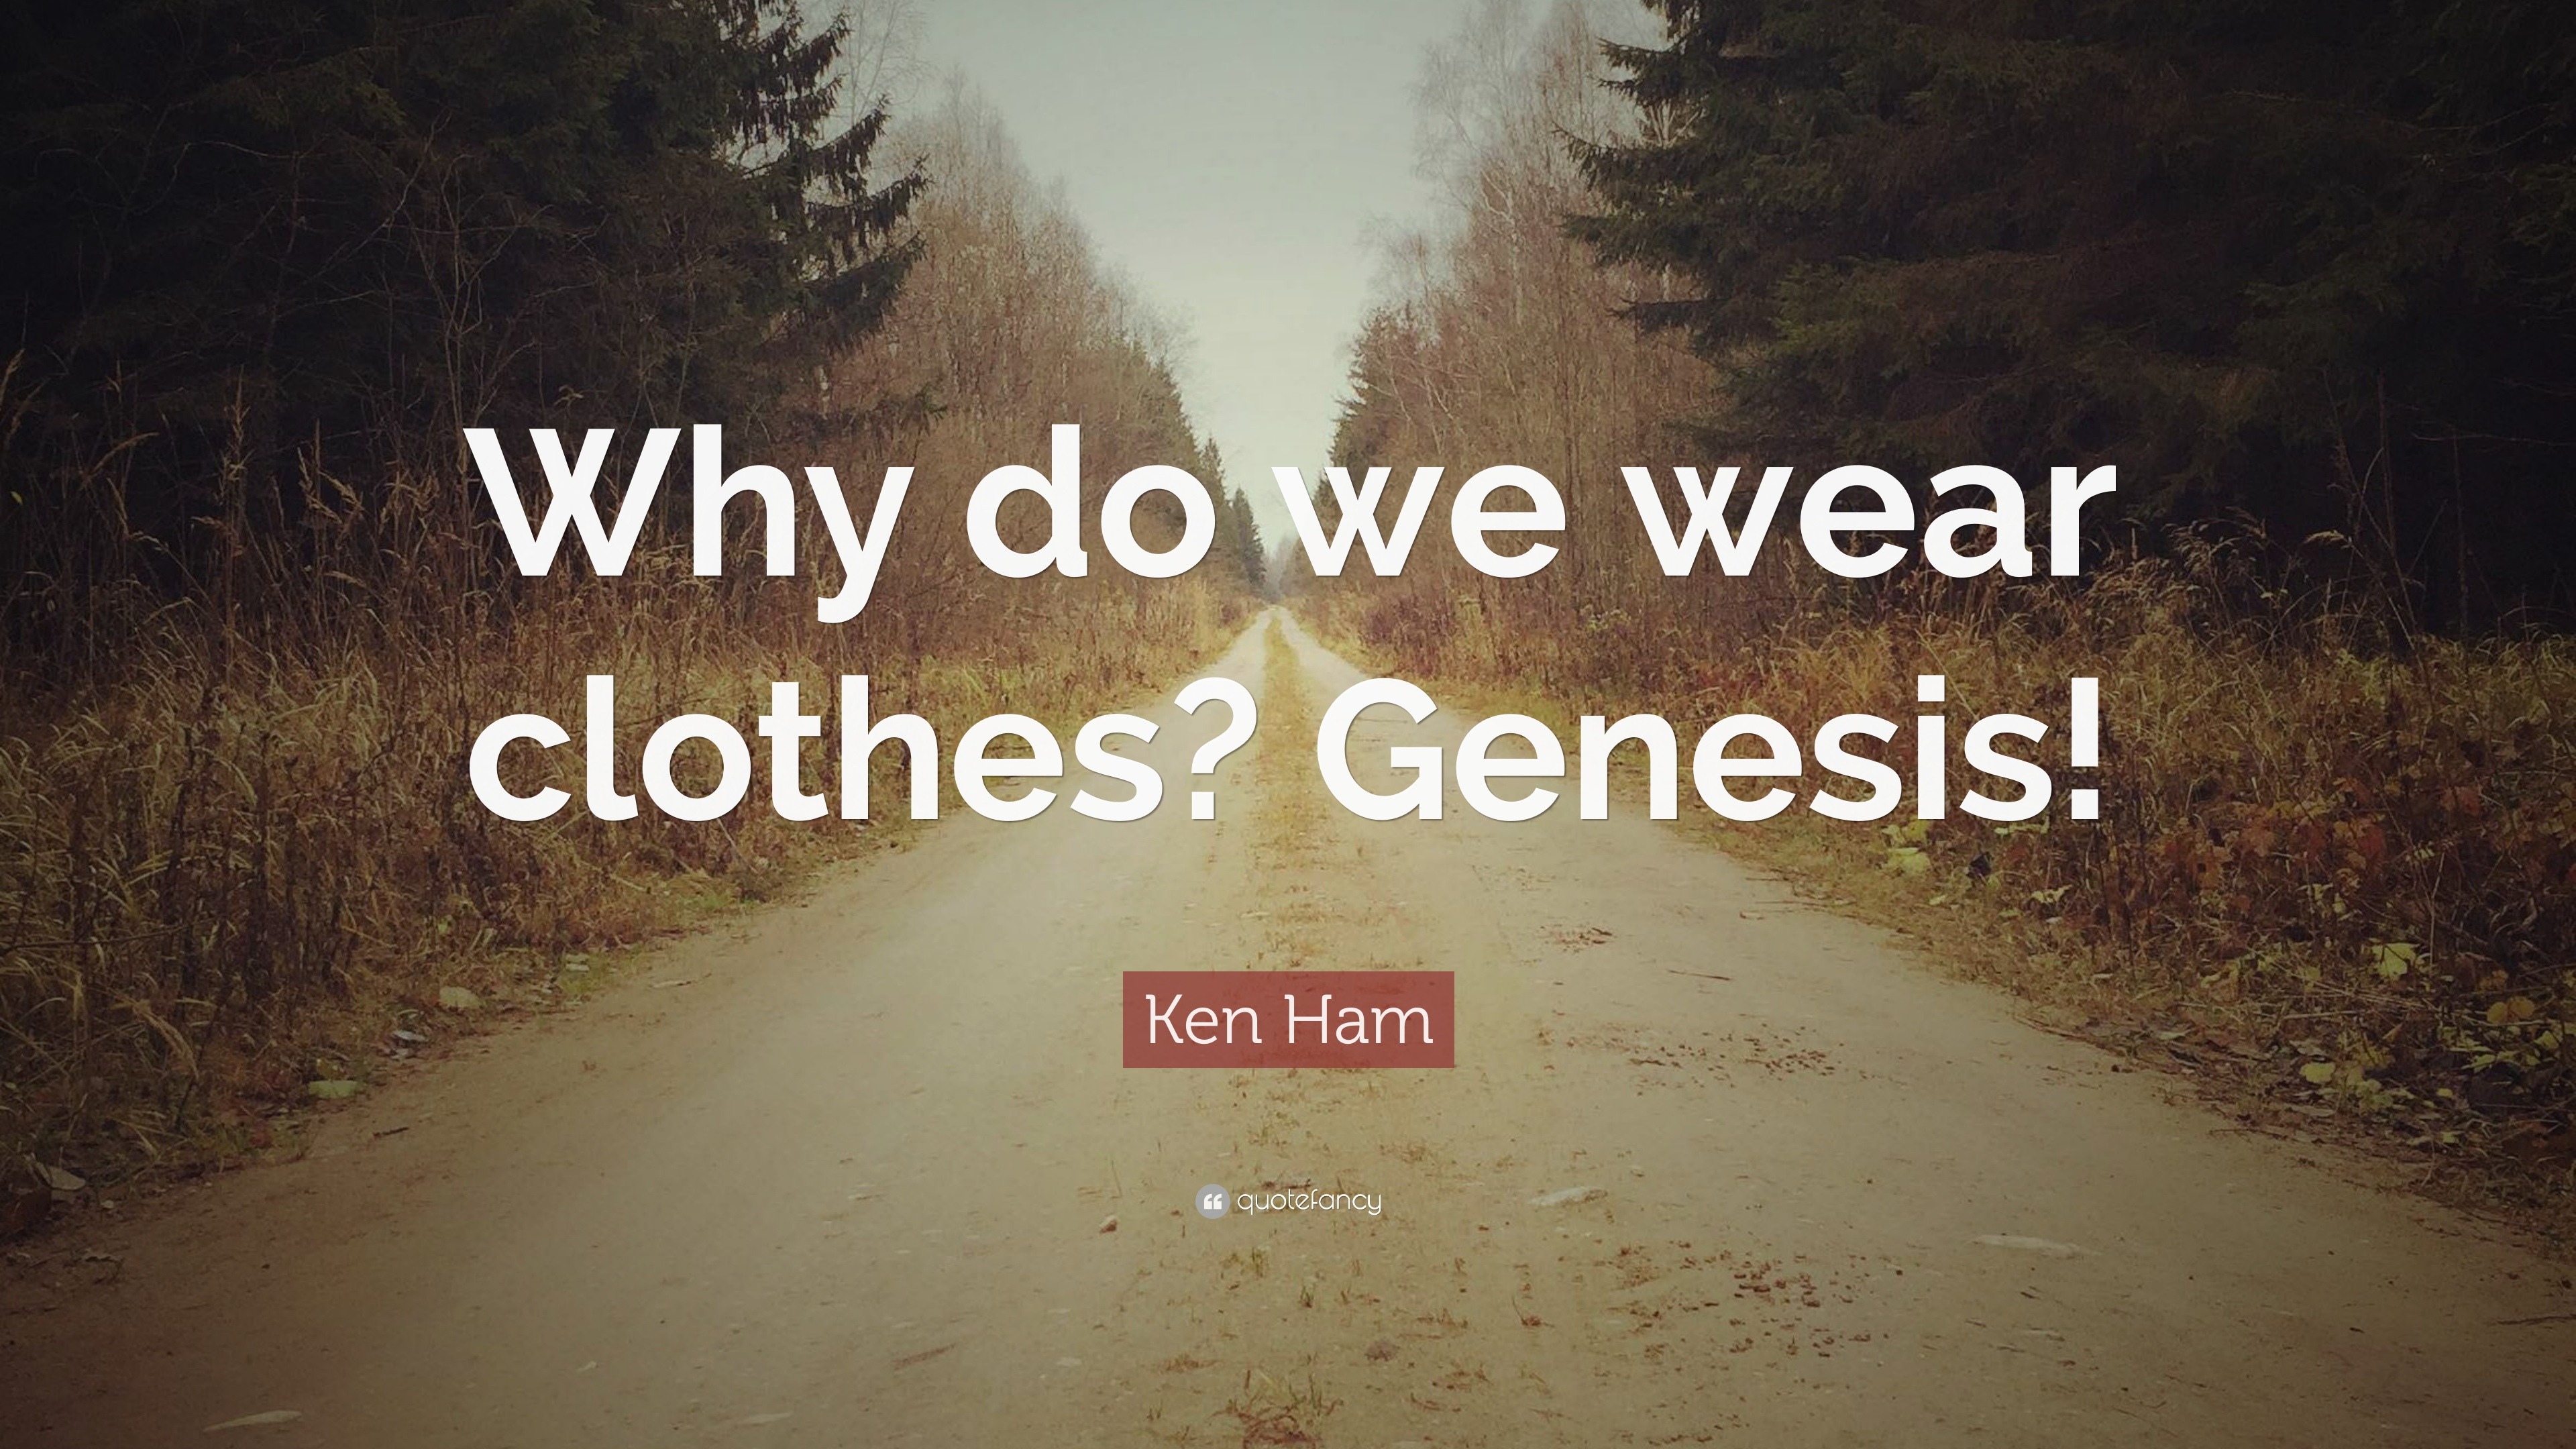 Ken Ham Quote: “Why do we wear clothes? Genesis!”